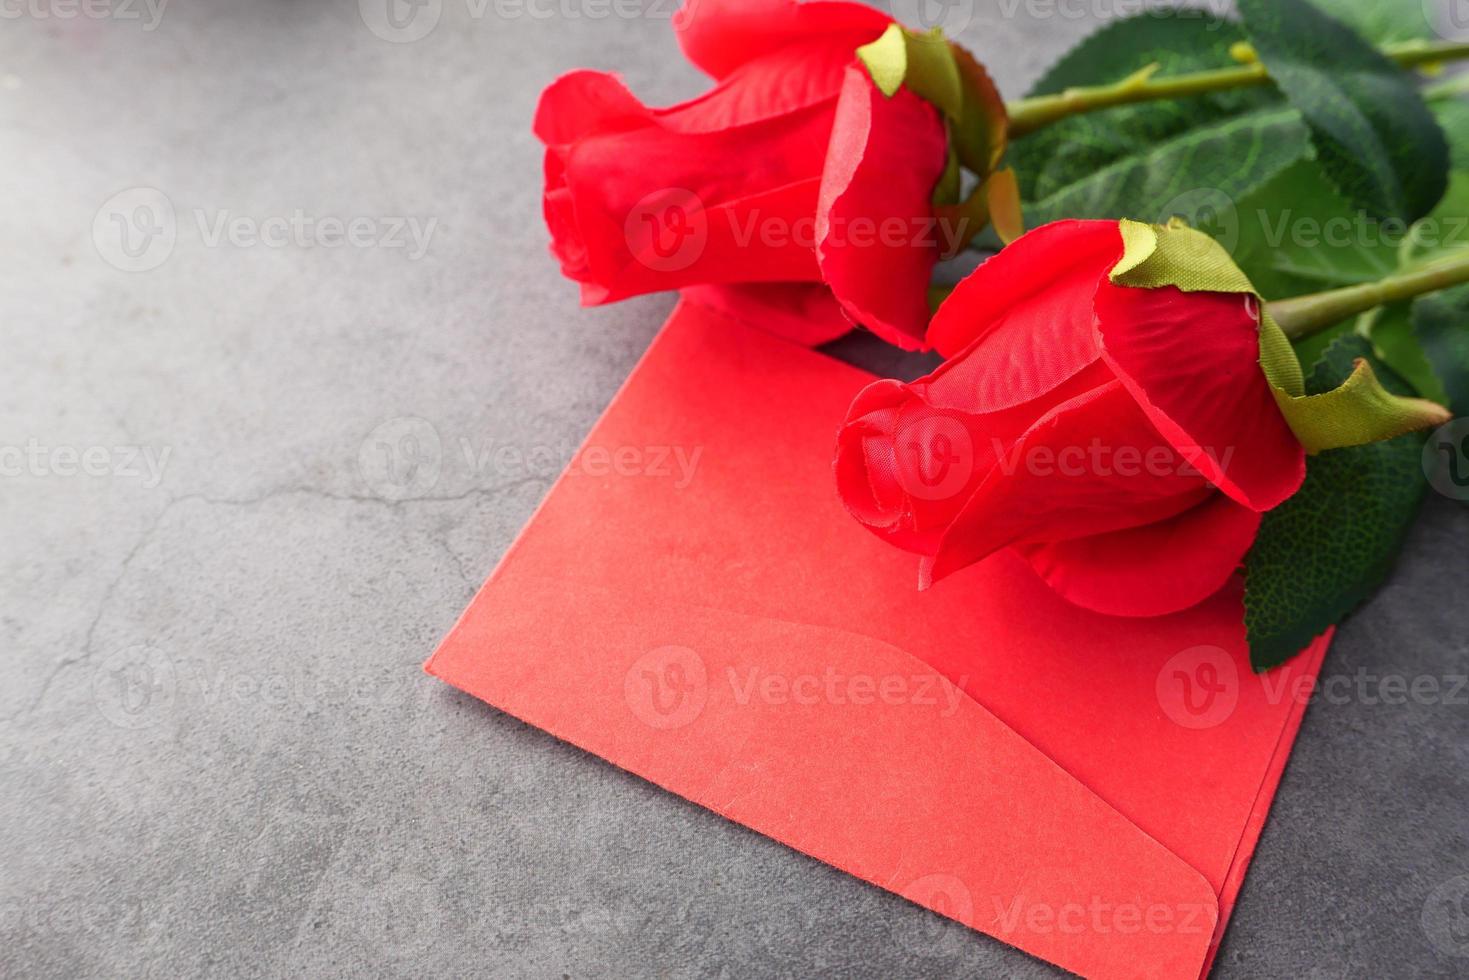 enveloppe rouge et roses rouges photo